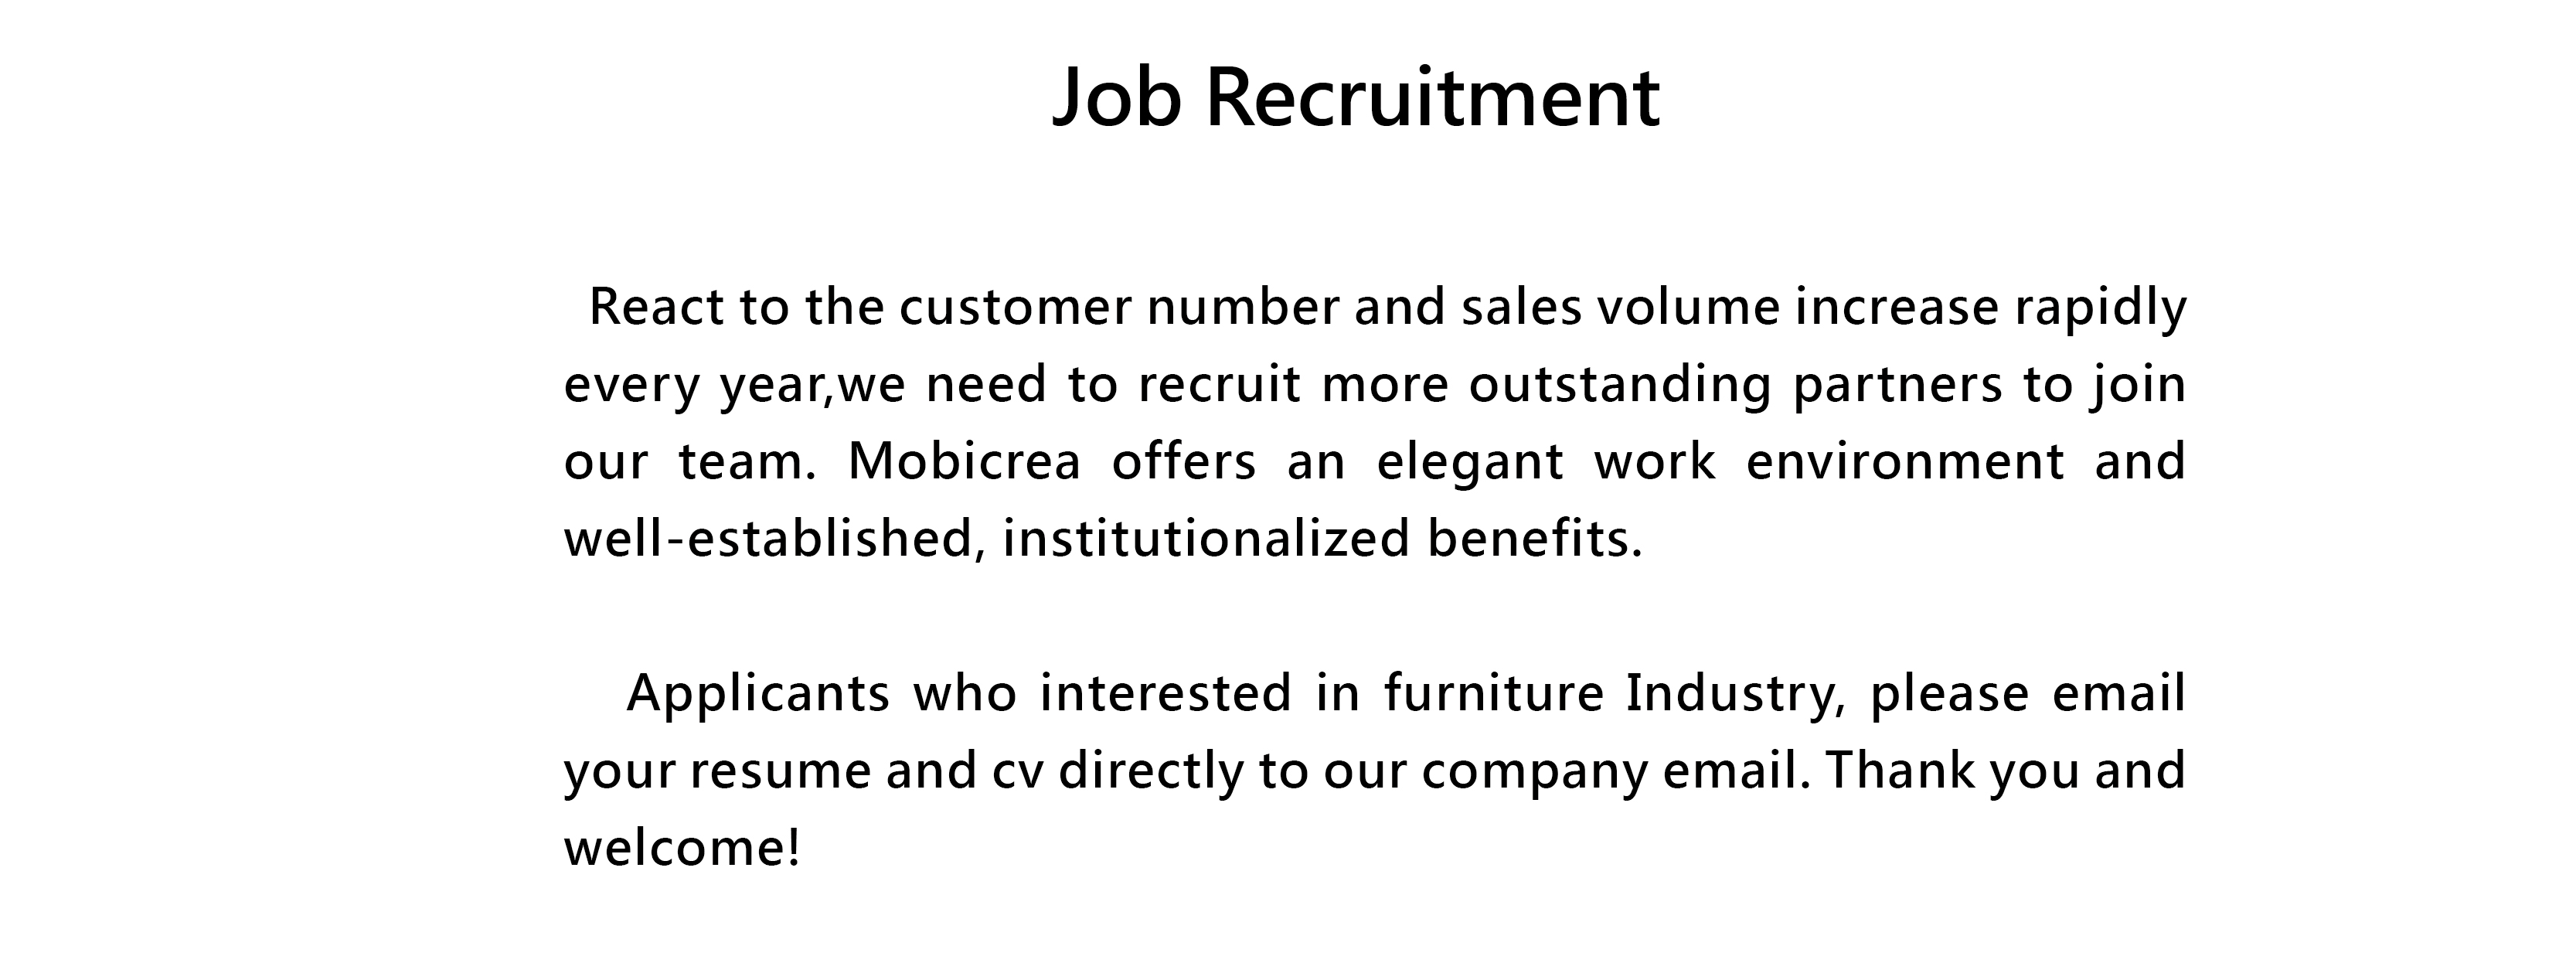 Job Recruitment